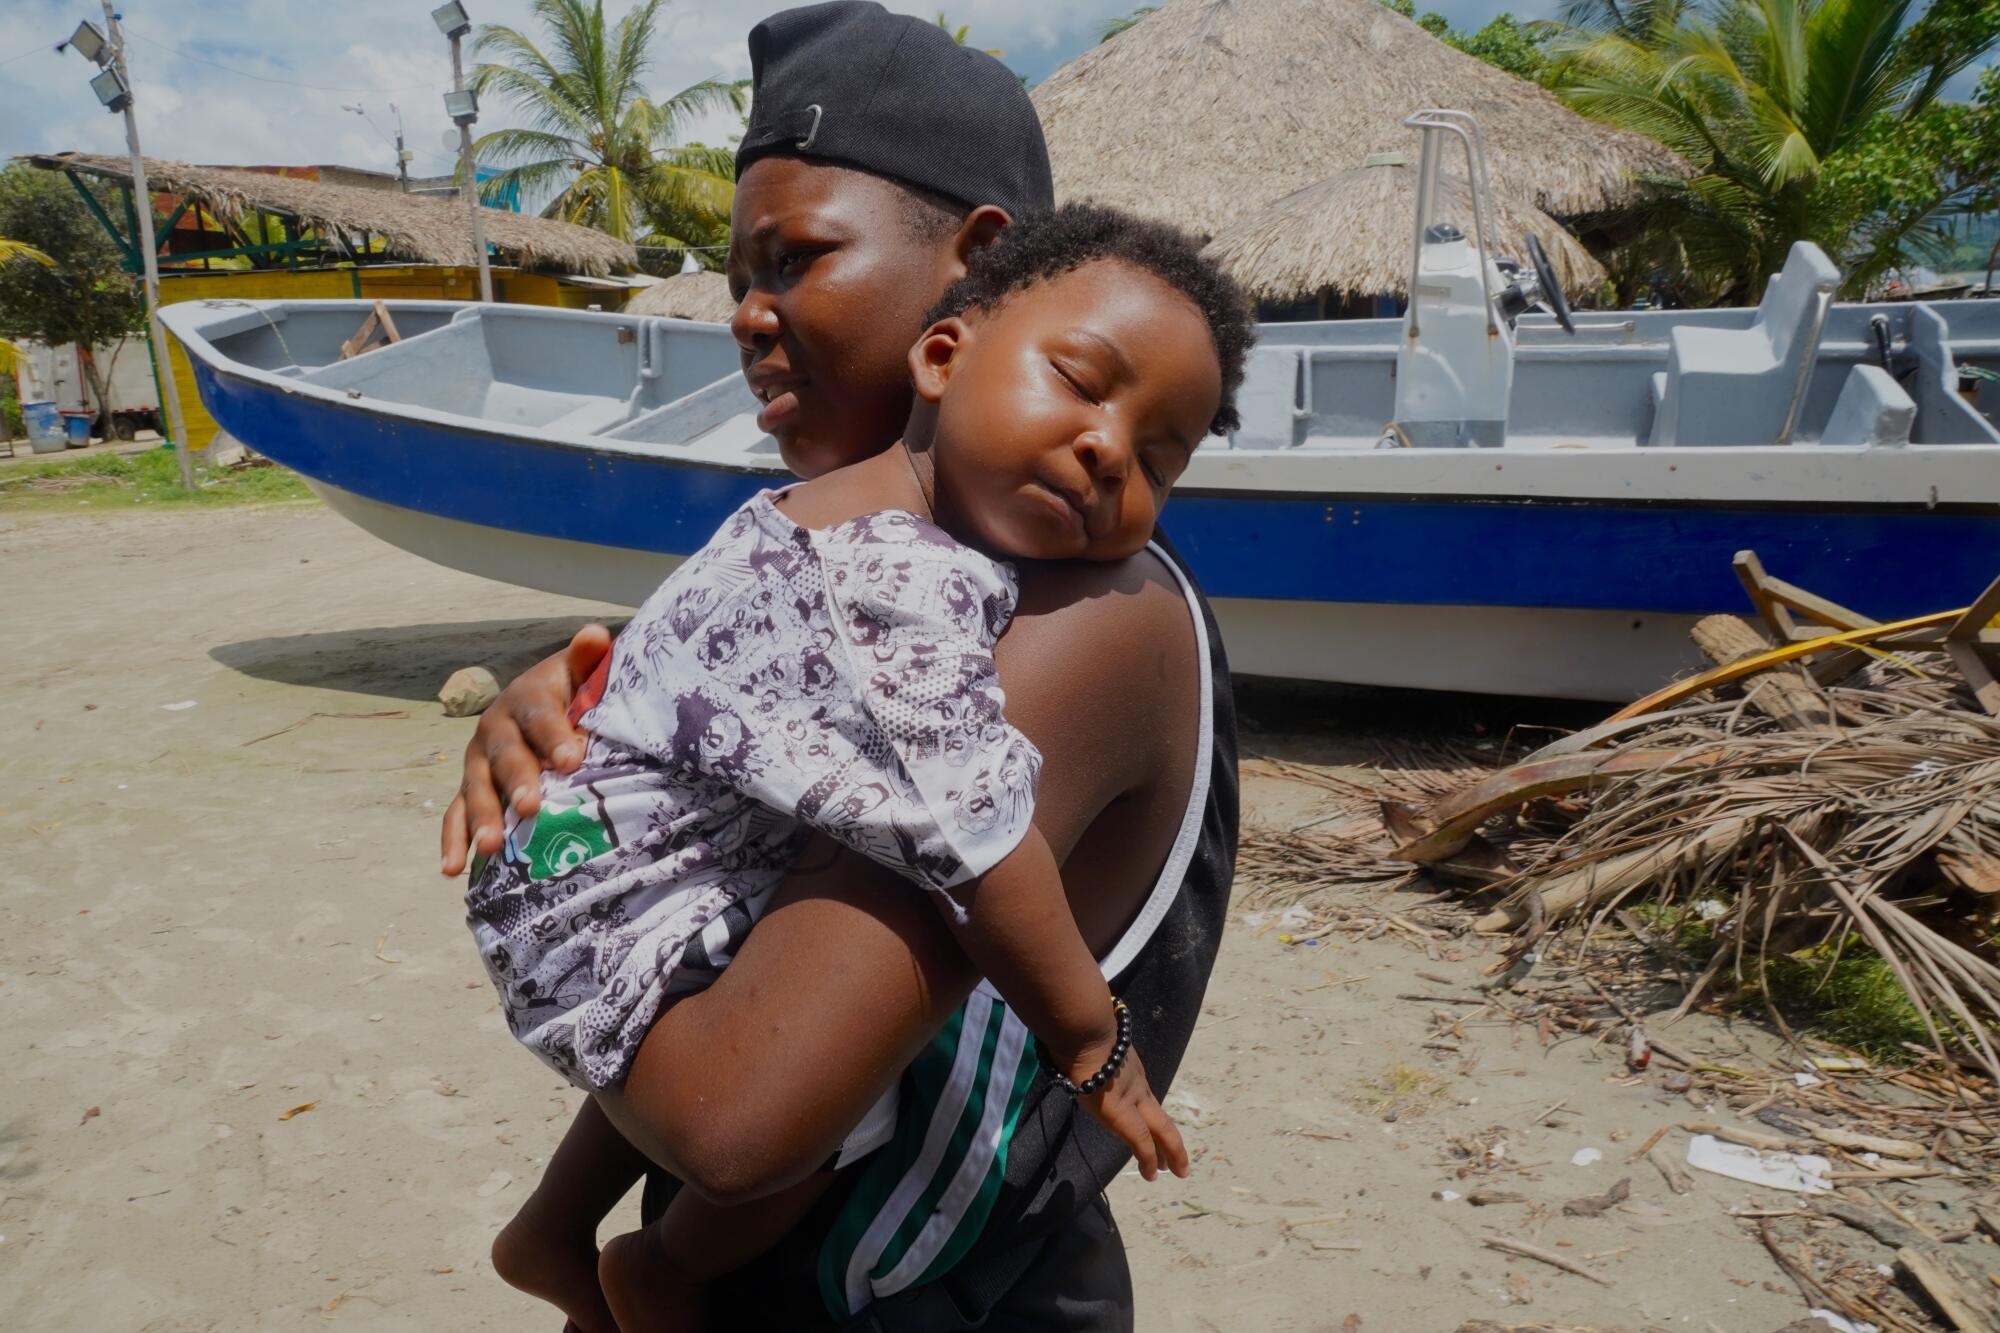 A Haitian woman holds her baby on a beach.